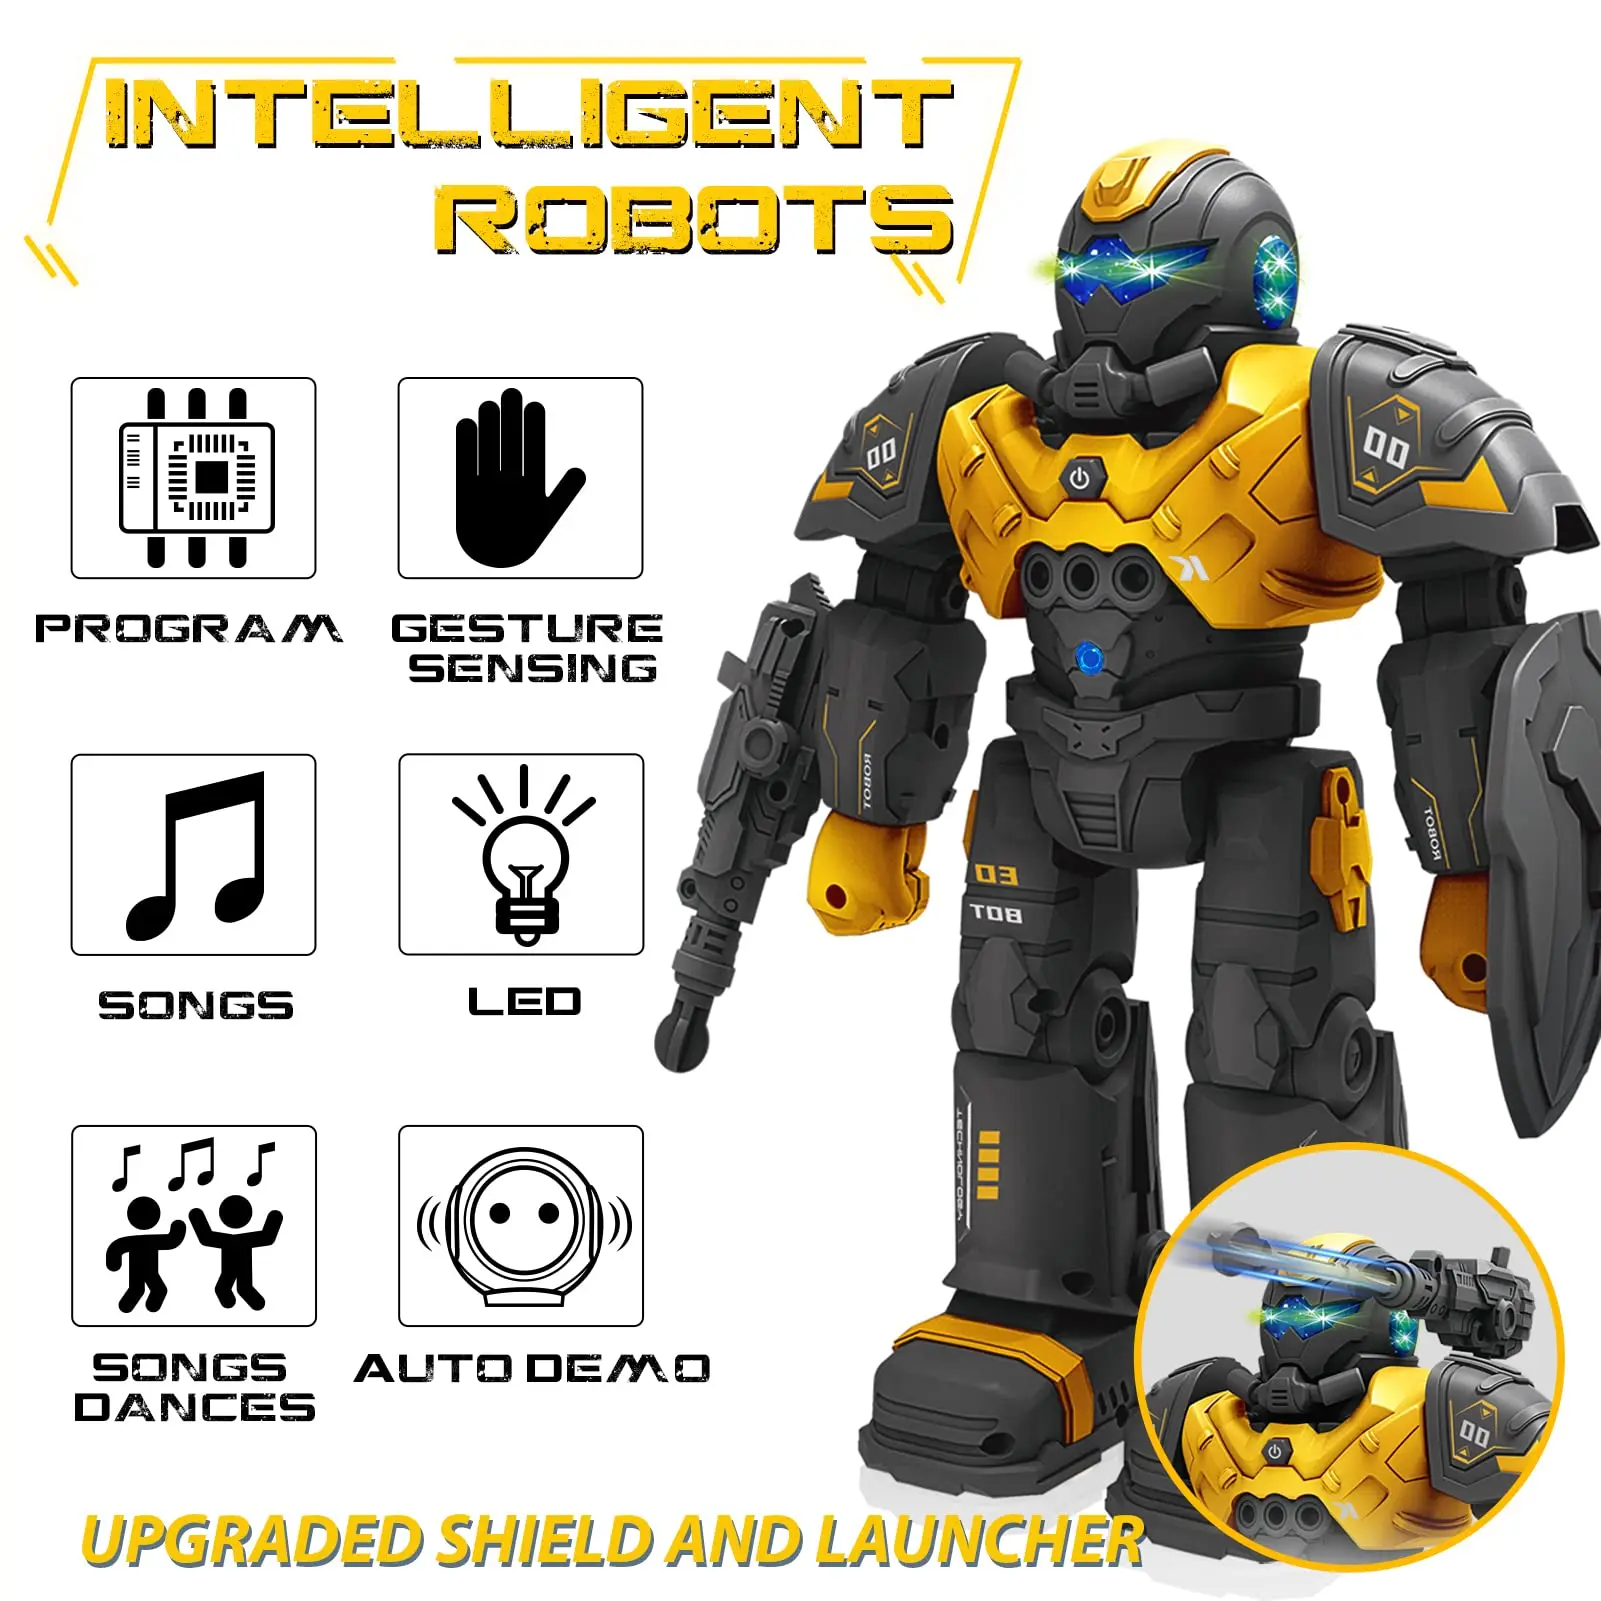 Ol robocop smart programmable gesture sensing remote control robots intelligent toy for thumb200